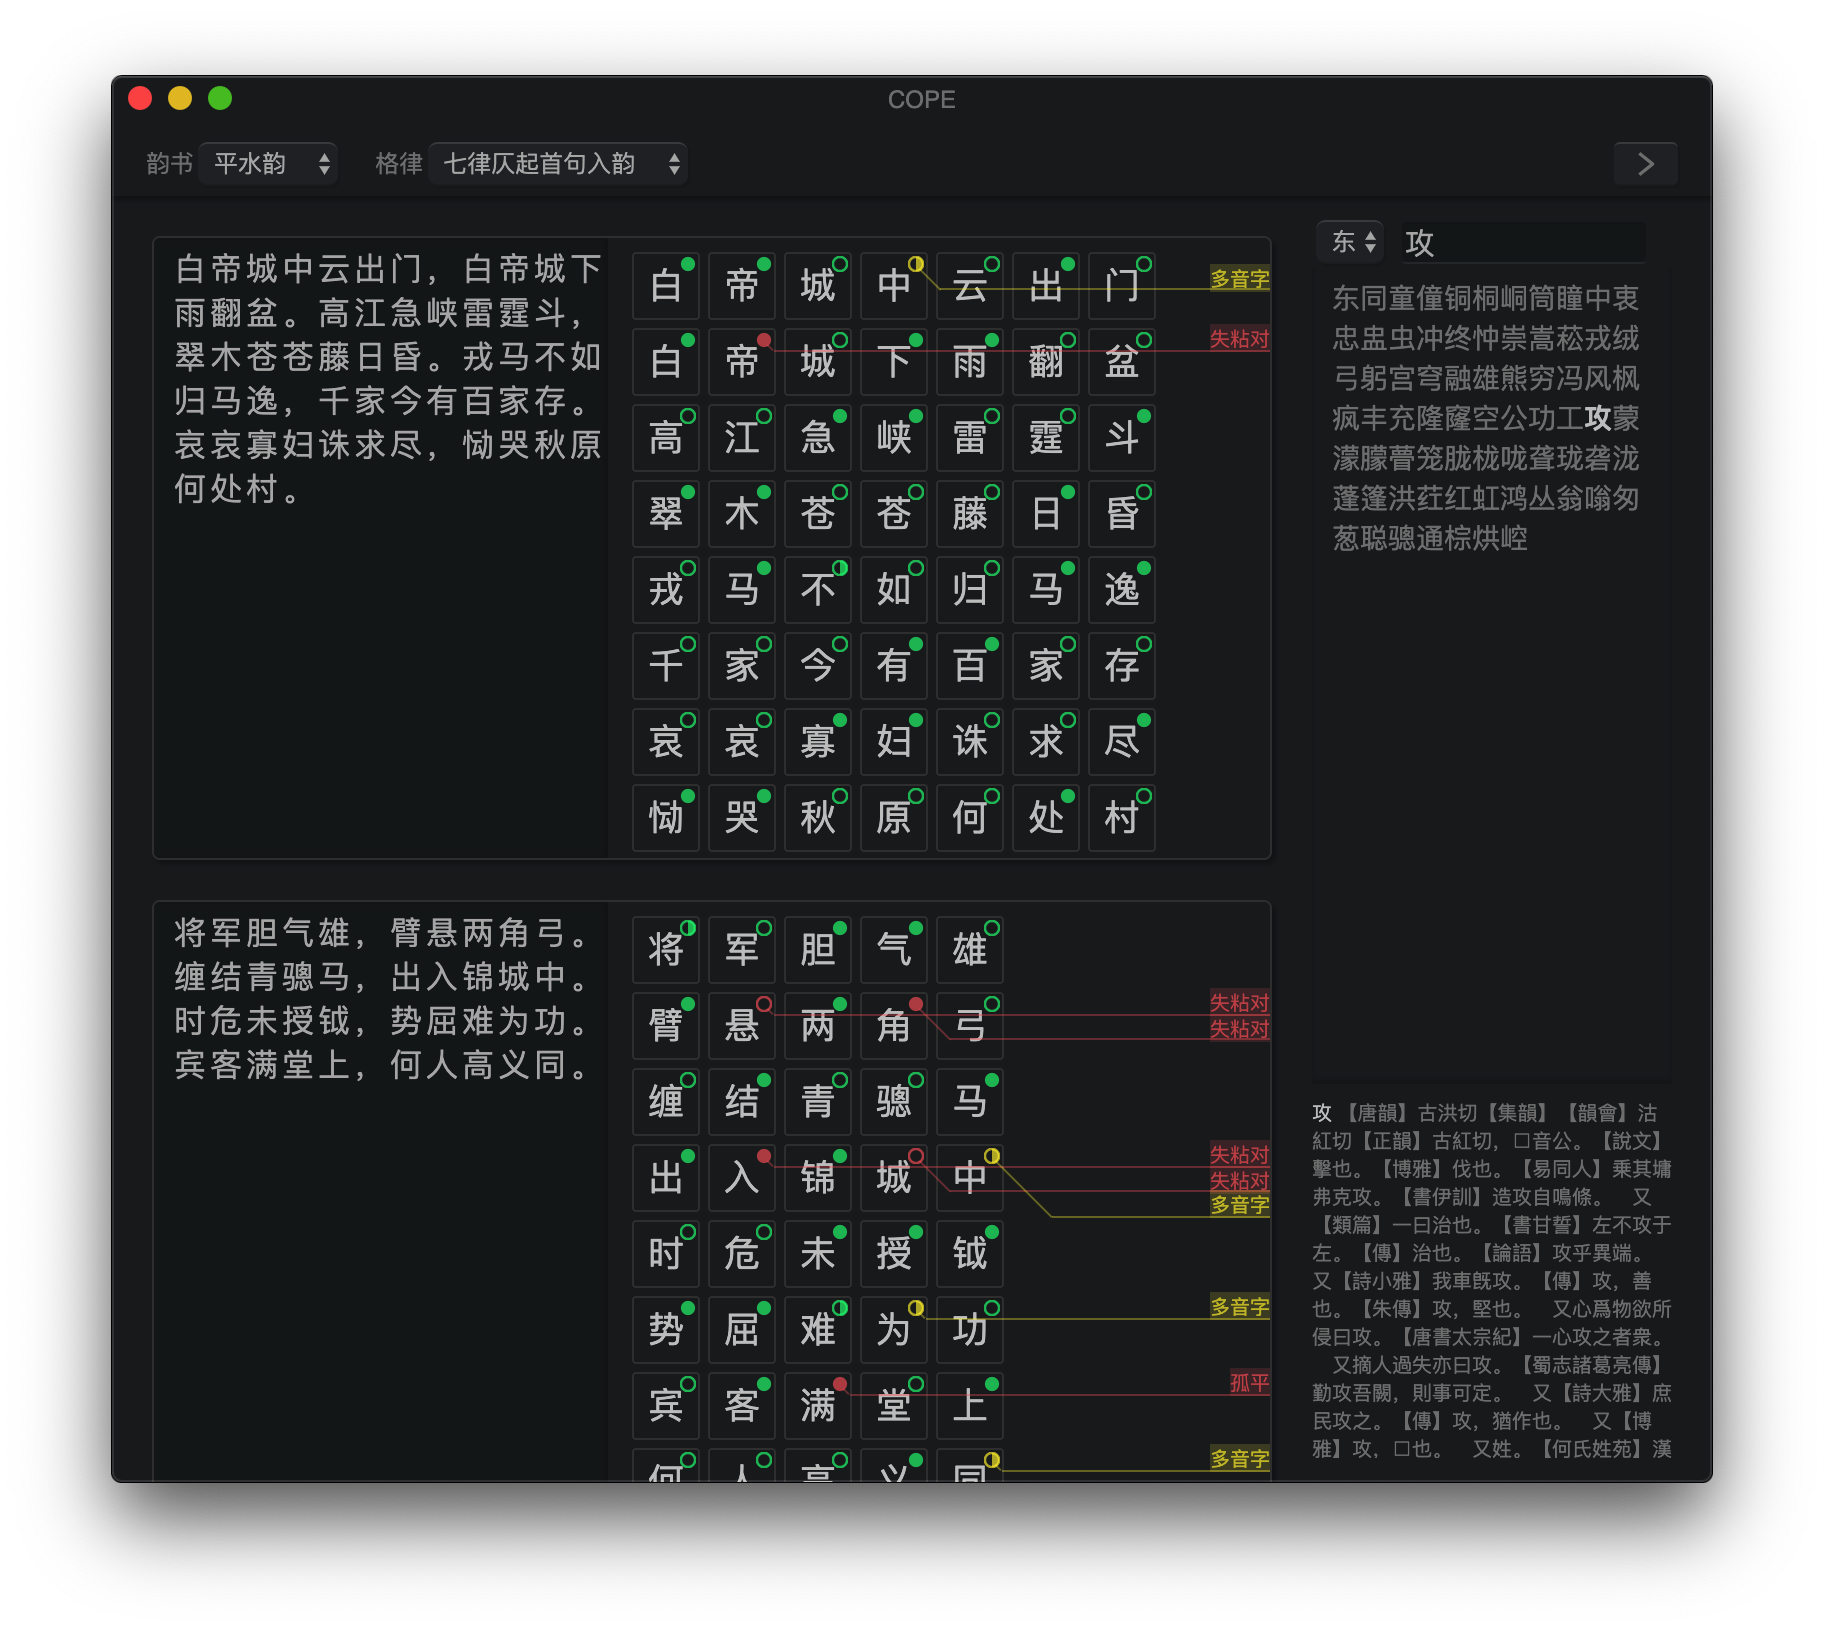 GitHub开源的文言文编程语言、程序生成中国山水画、格律诗编辑程序